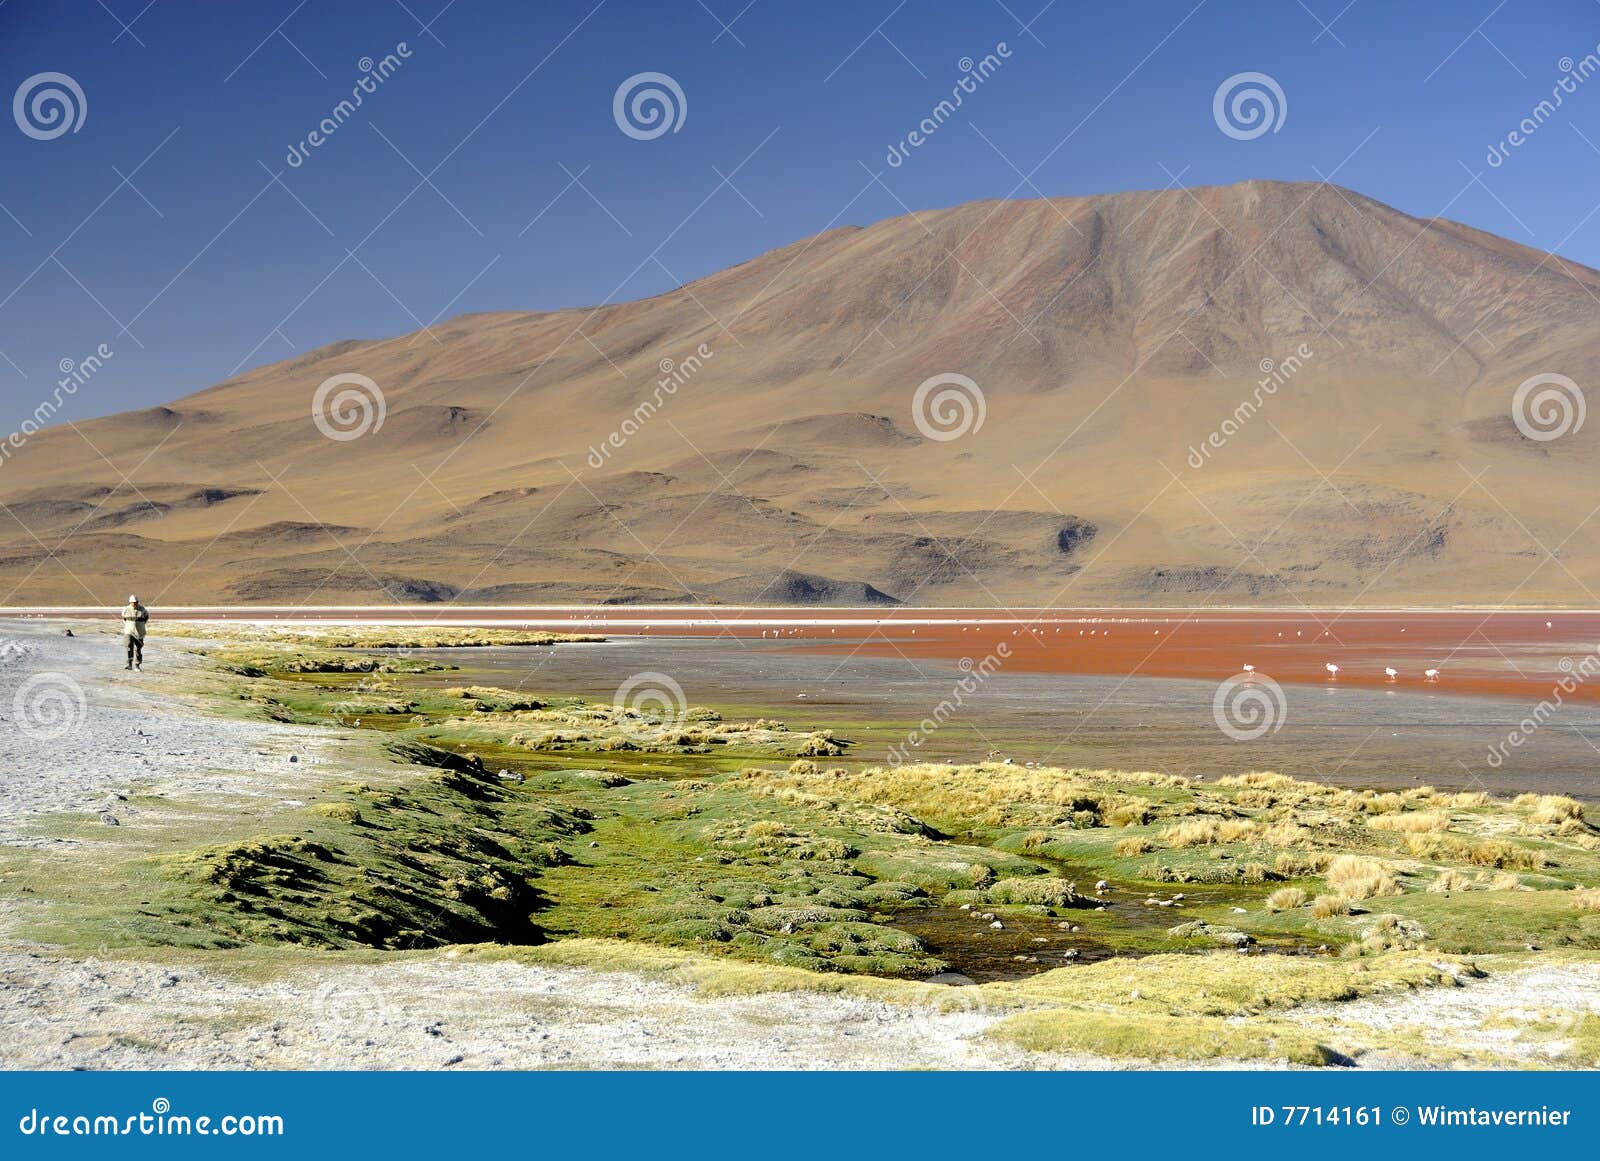 laguna colorada, altiplano, bolivian andes